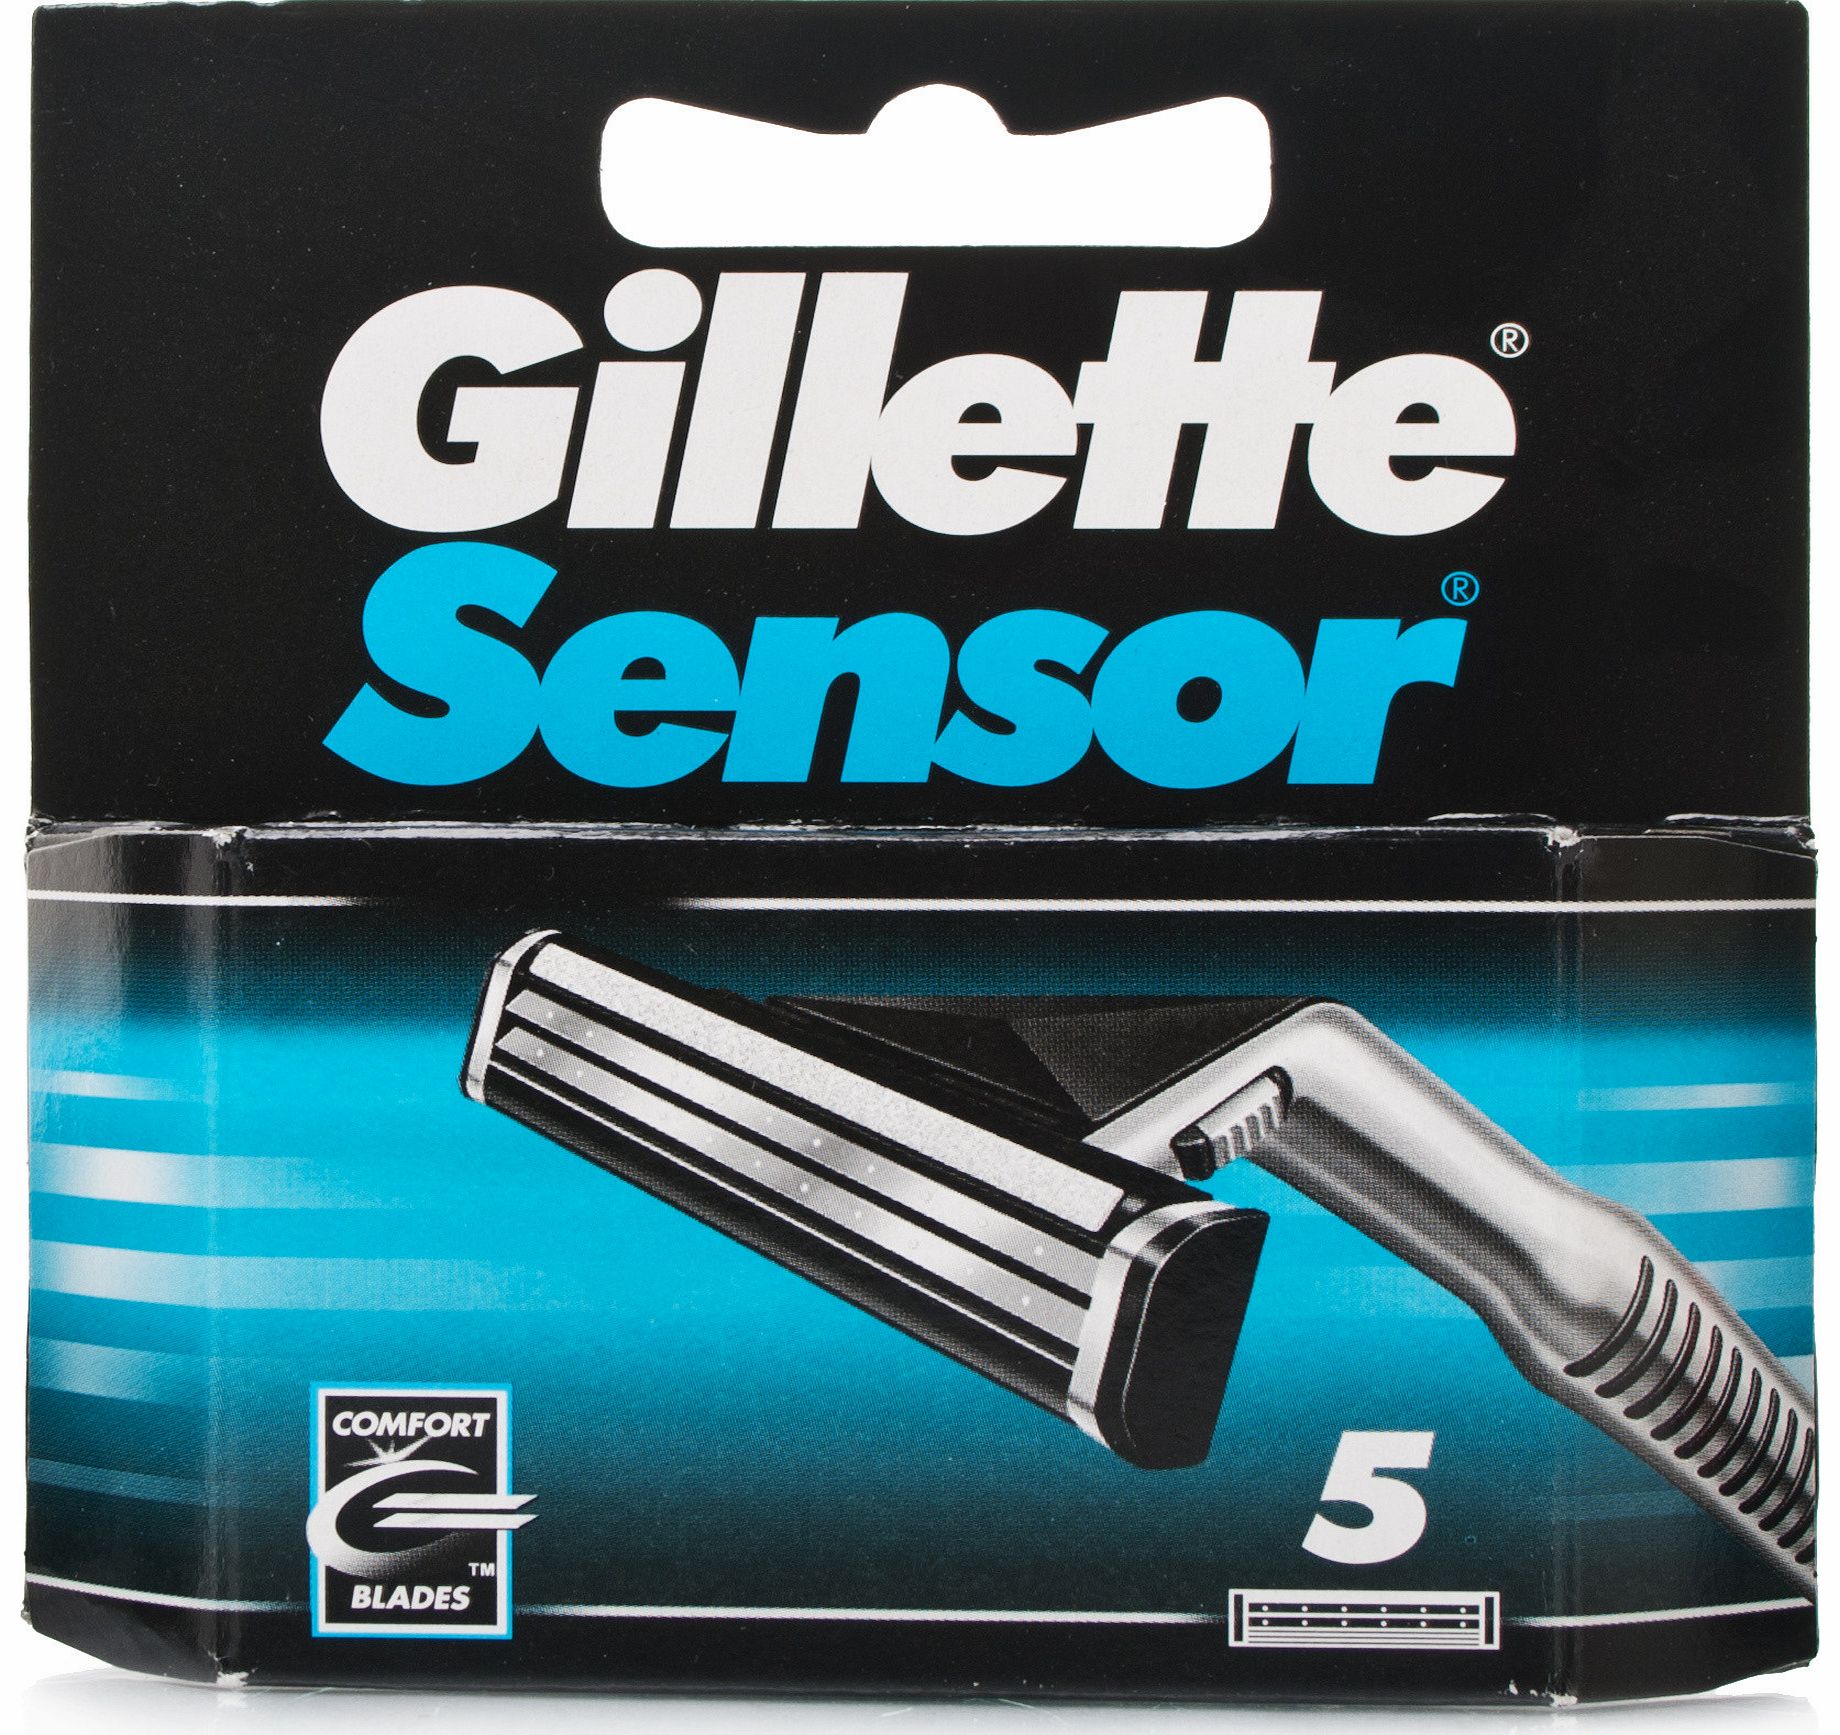 Gillette Sensor Razor Blades